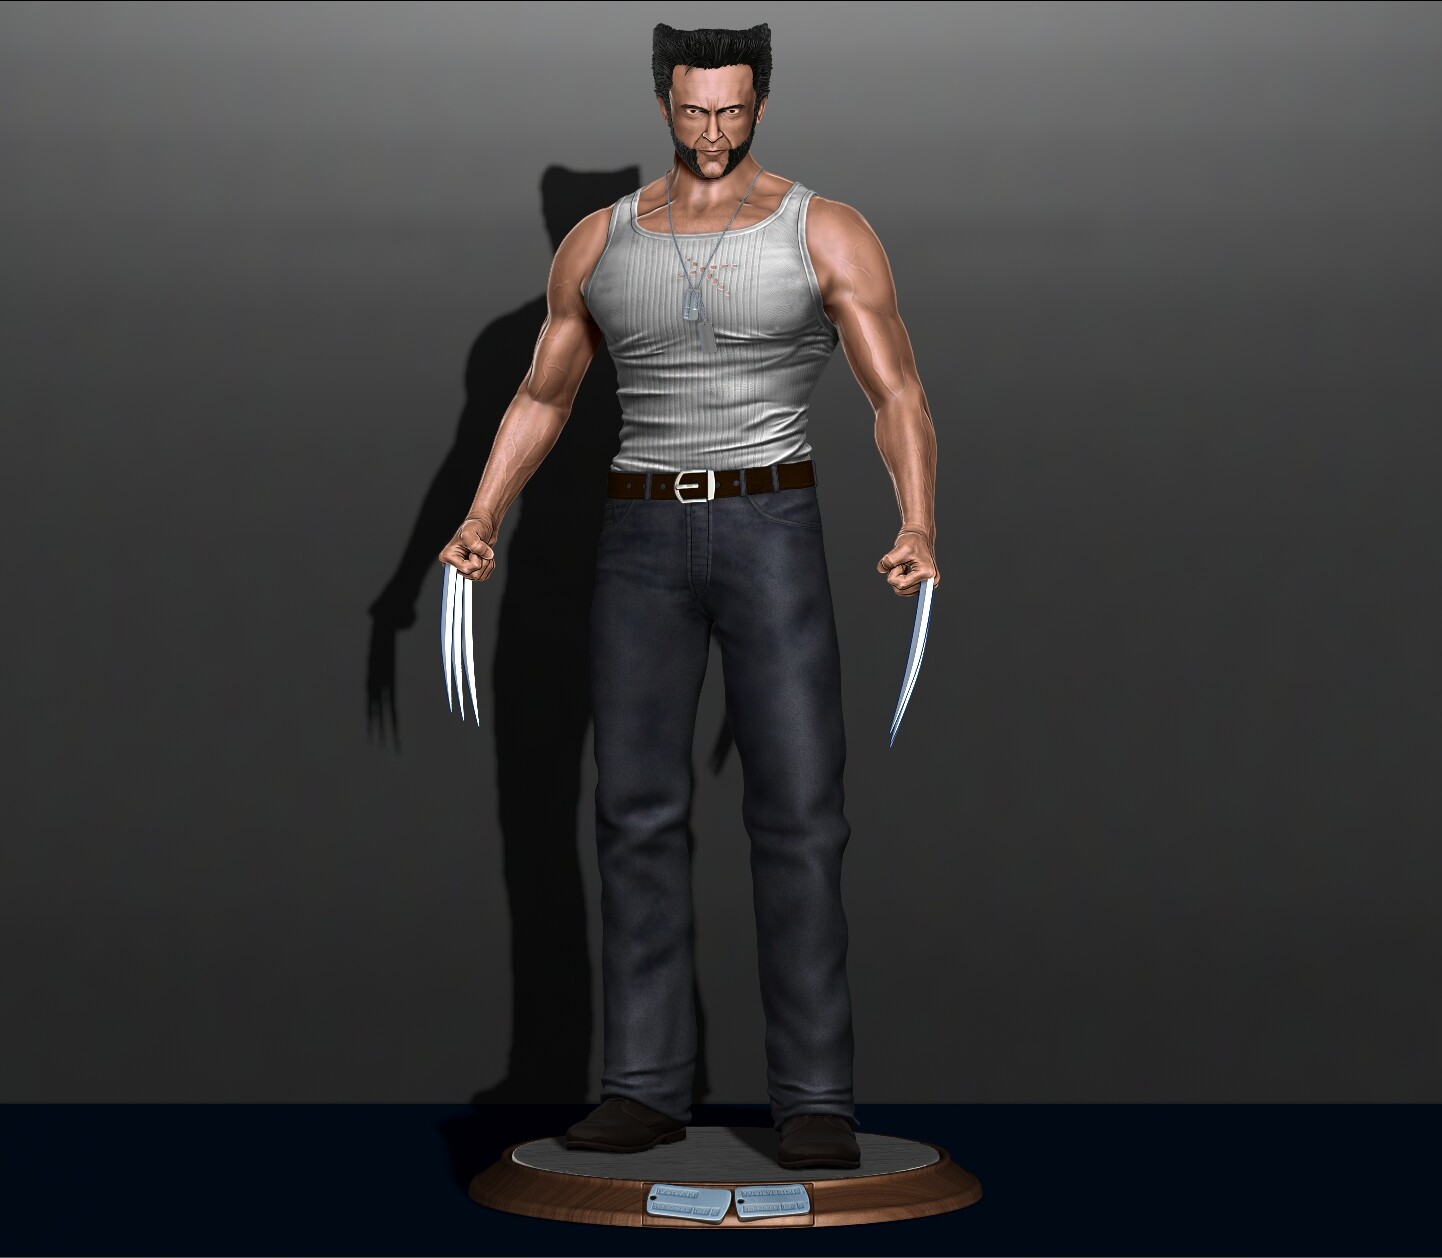 Wolverine action stl files 3d model printing